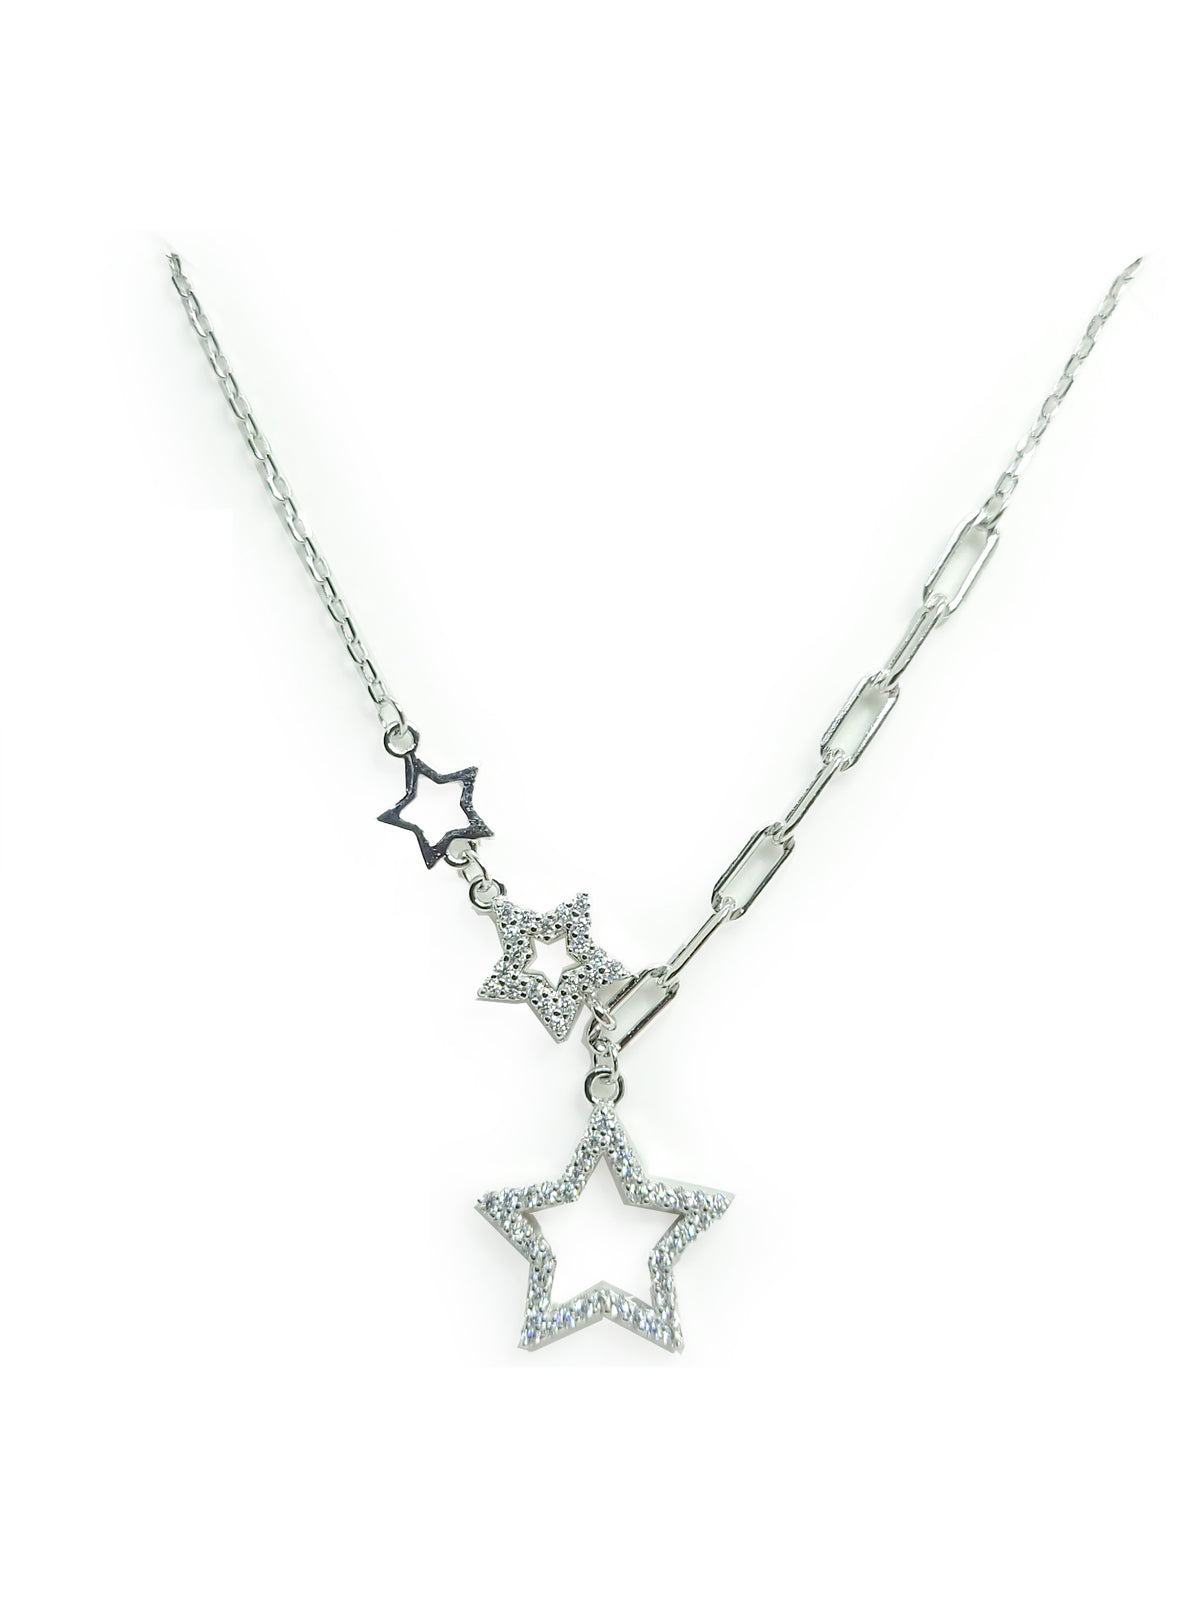 Stars Pendant & Chain Set(Silver)